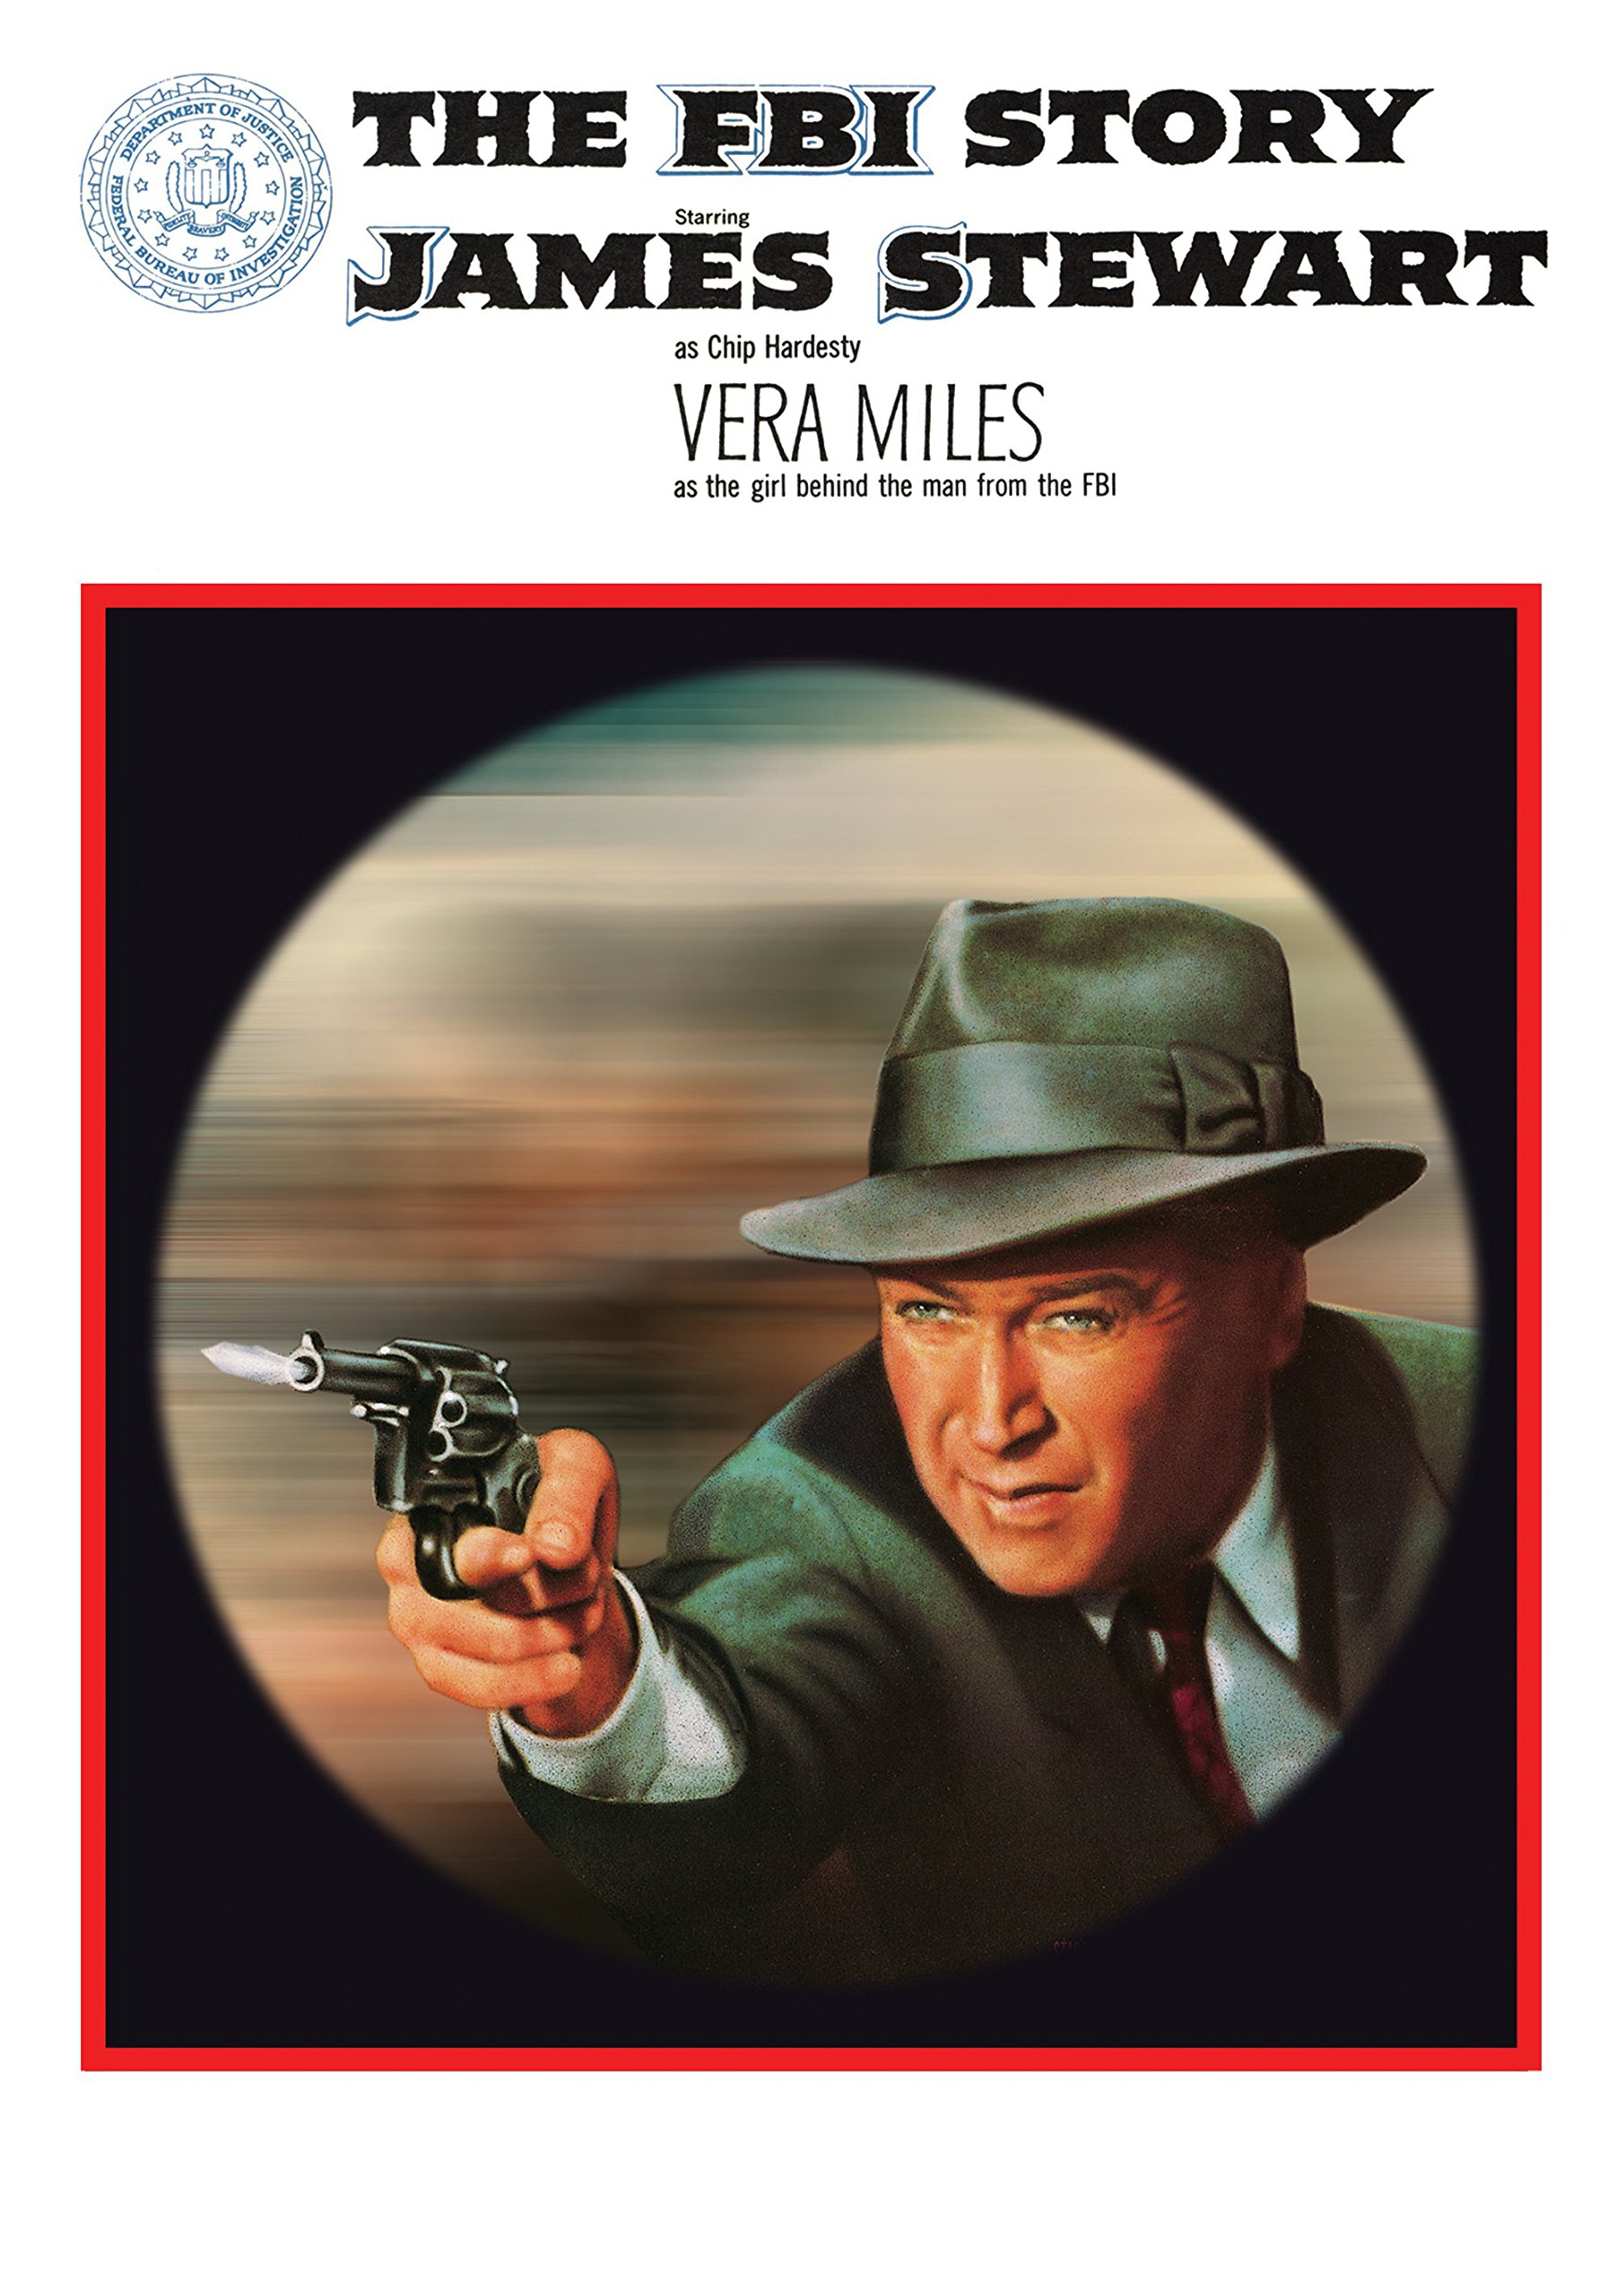 The FBI Story, starring Jimmy Stewart, Vera Miles